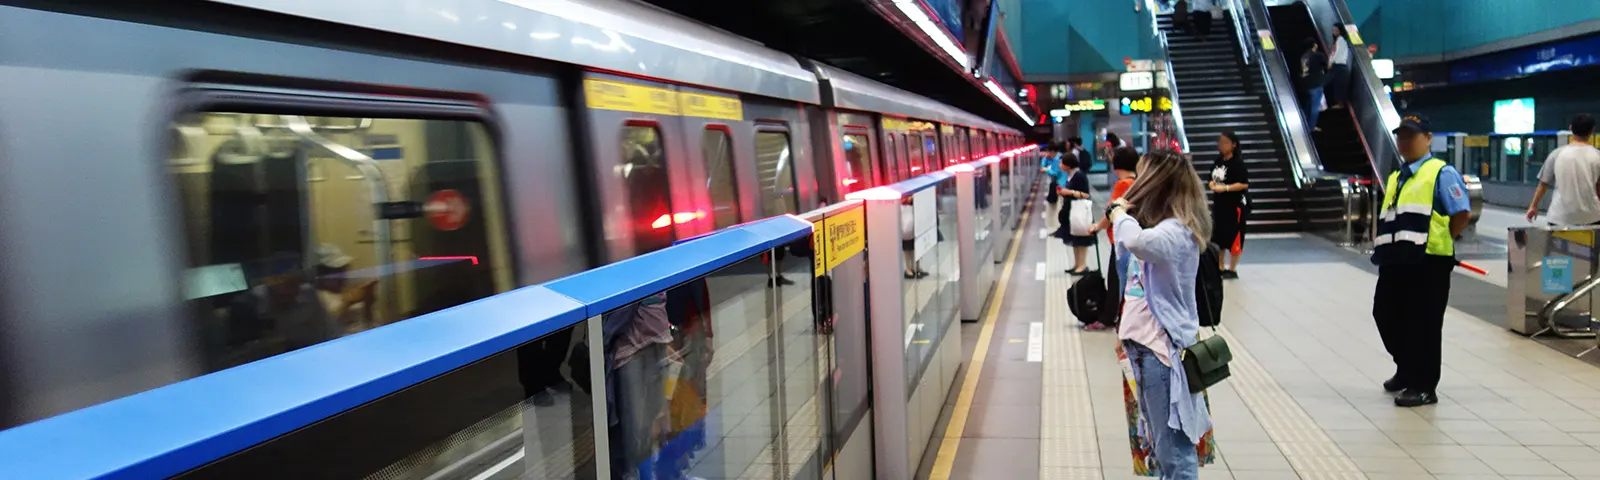 Passengers wait at an underground MRT Station.